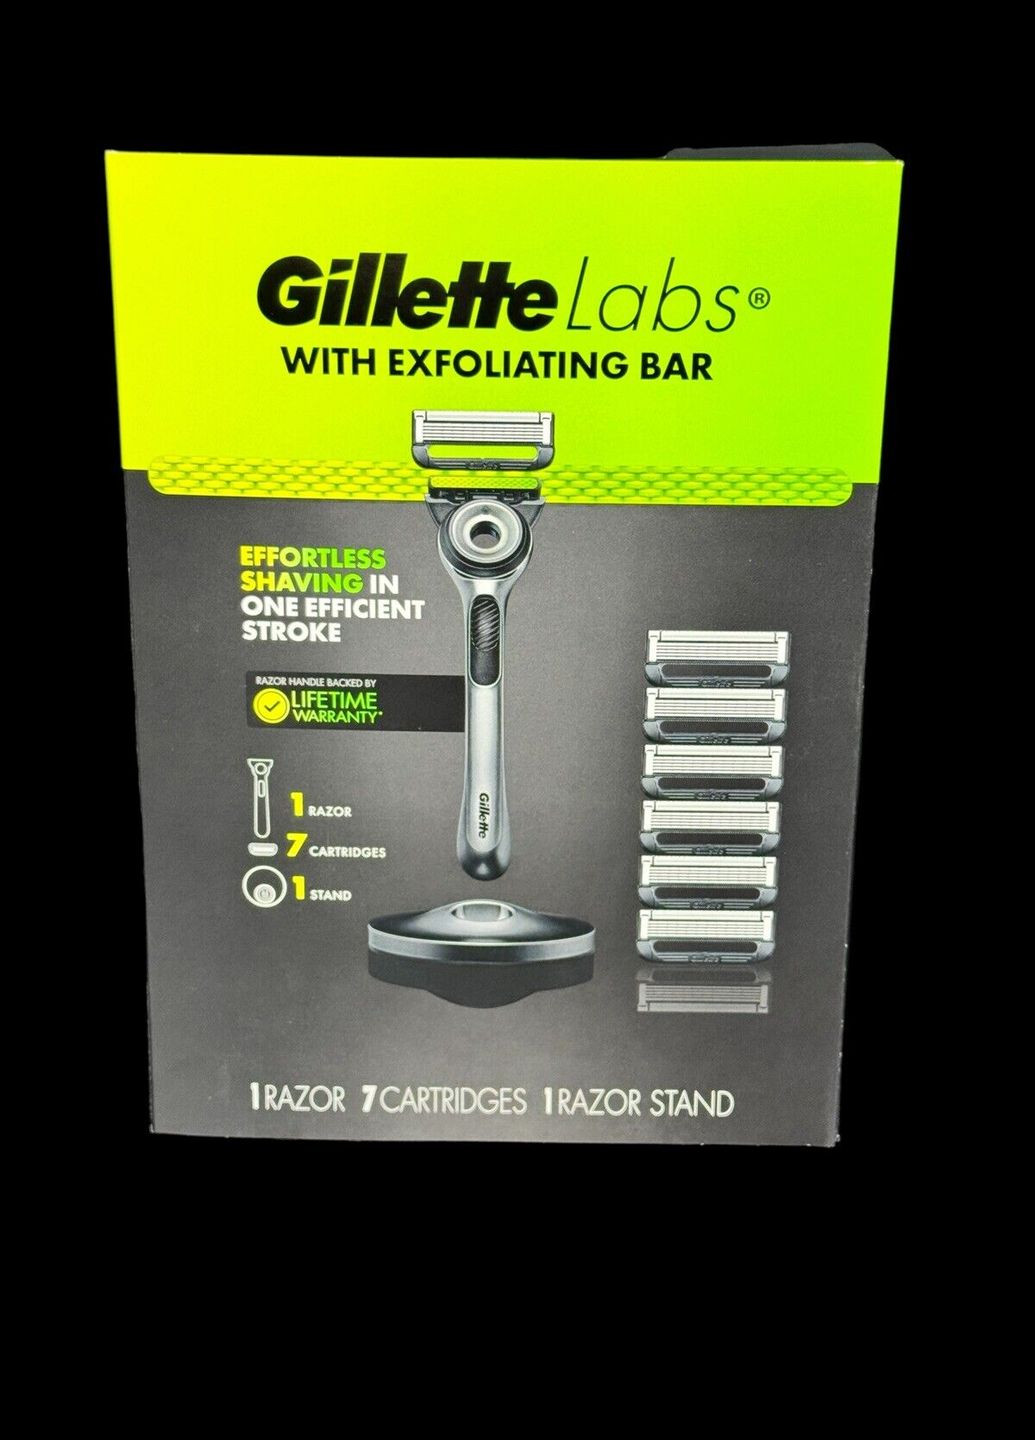 Бритва Labs с отшелушивающей полоской 1 бритва 1 подставка 7 картриджей Gillette (289876313)